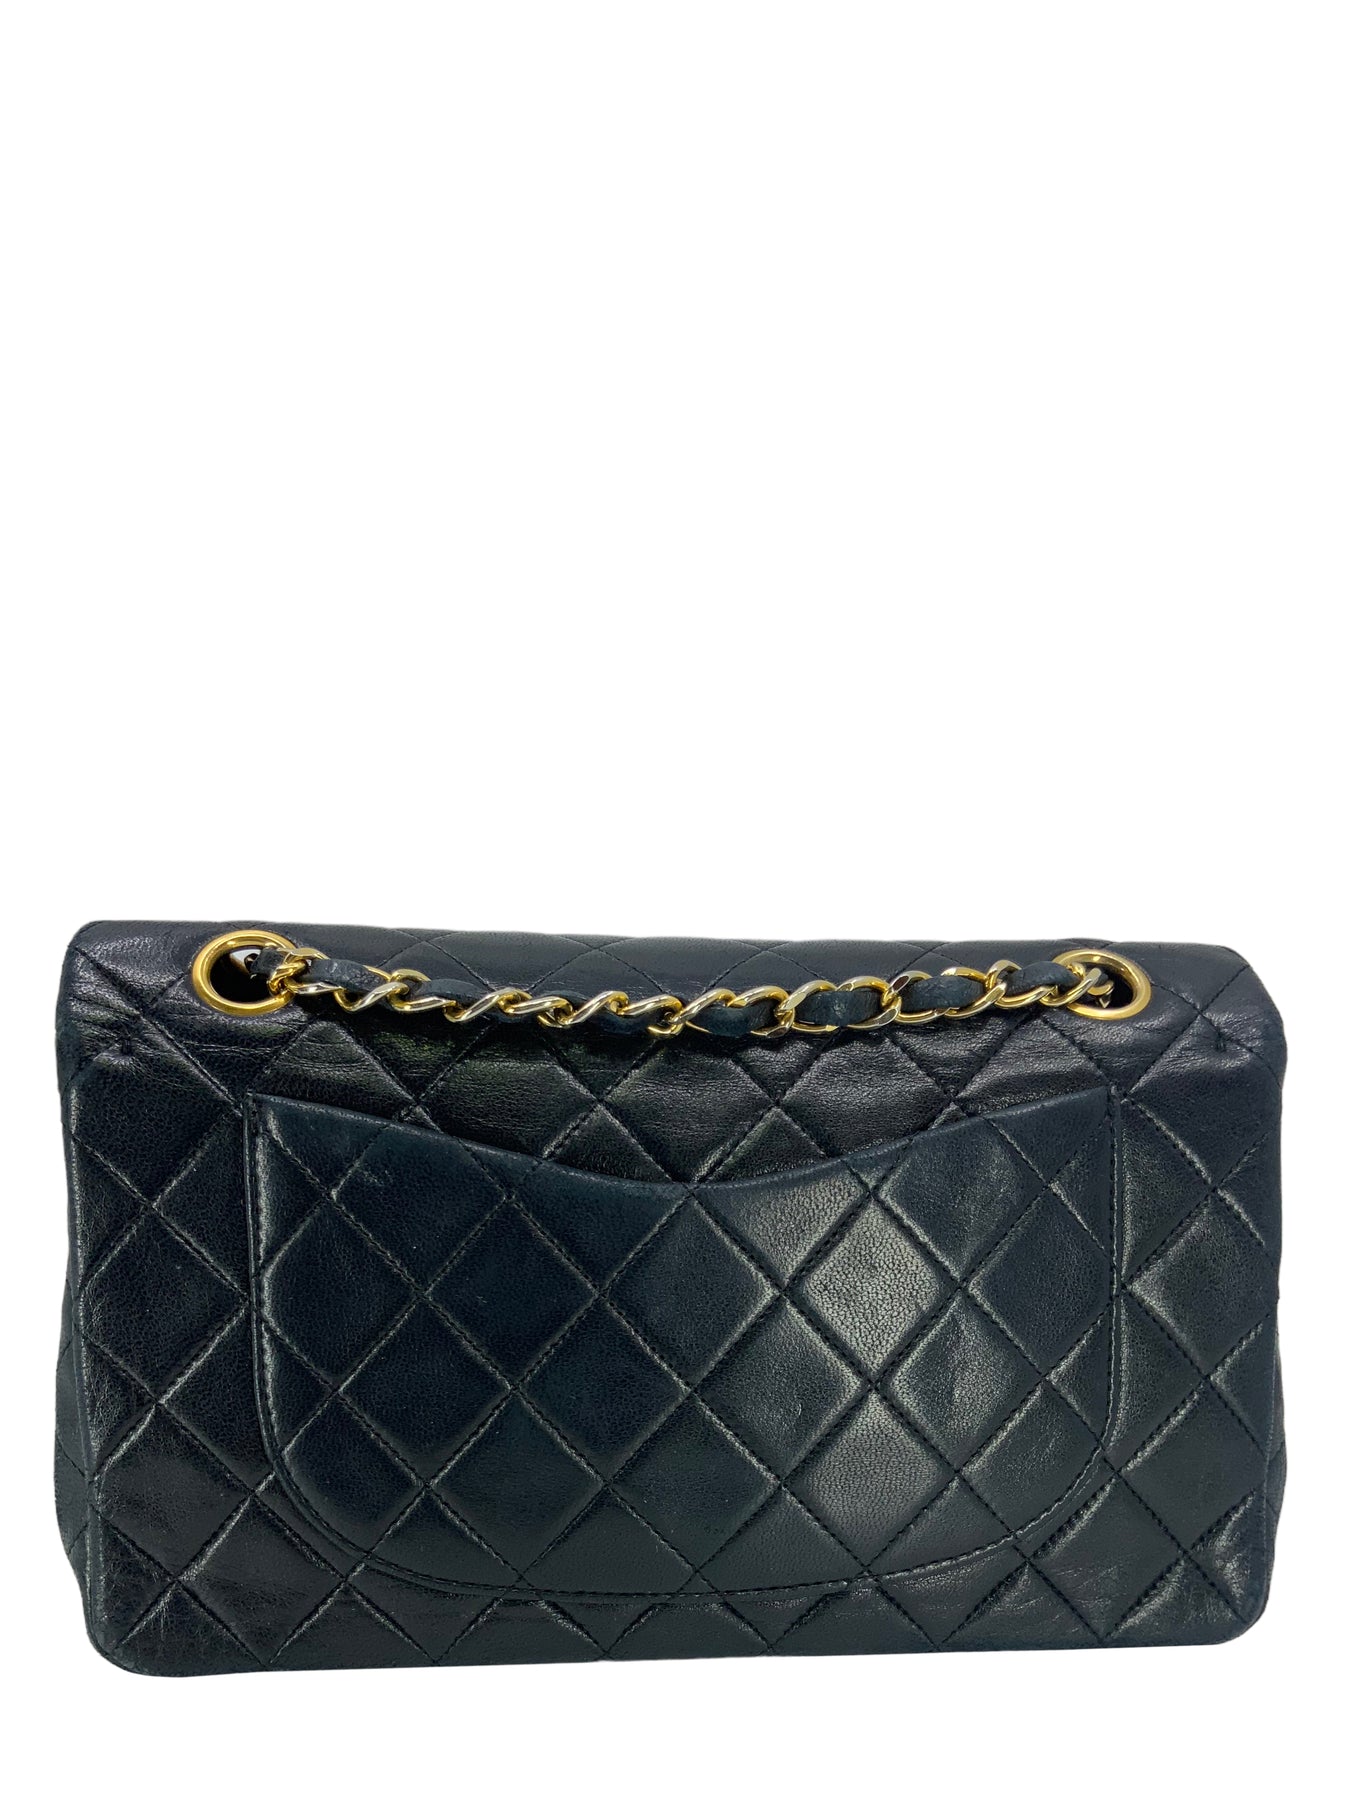 chanel wallet on chain black caviar bag